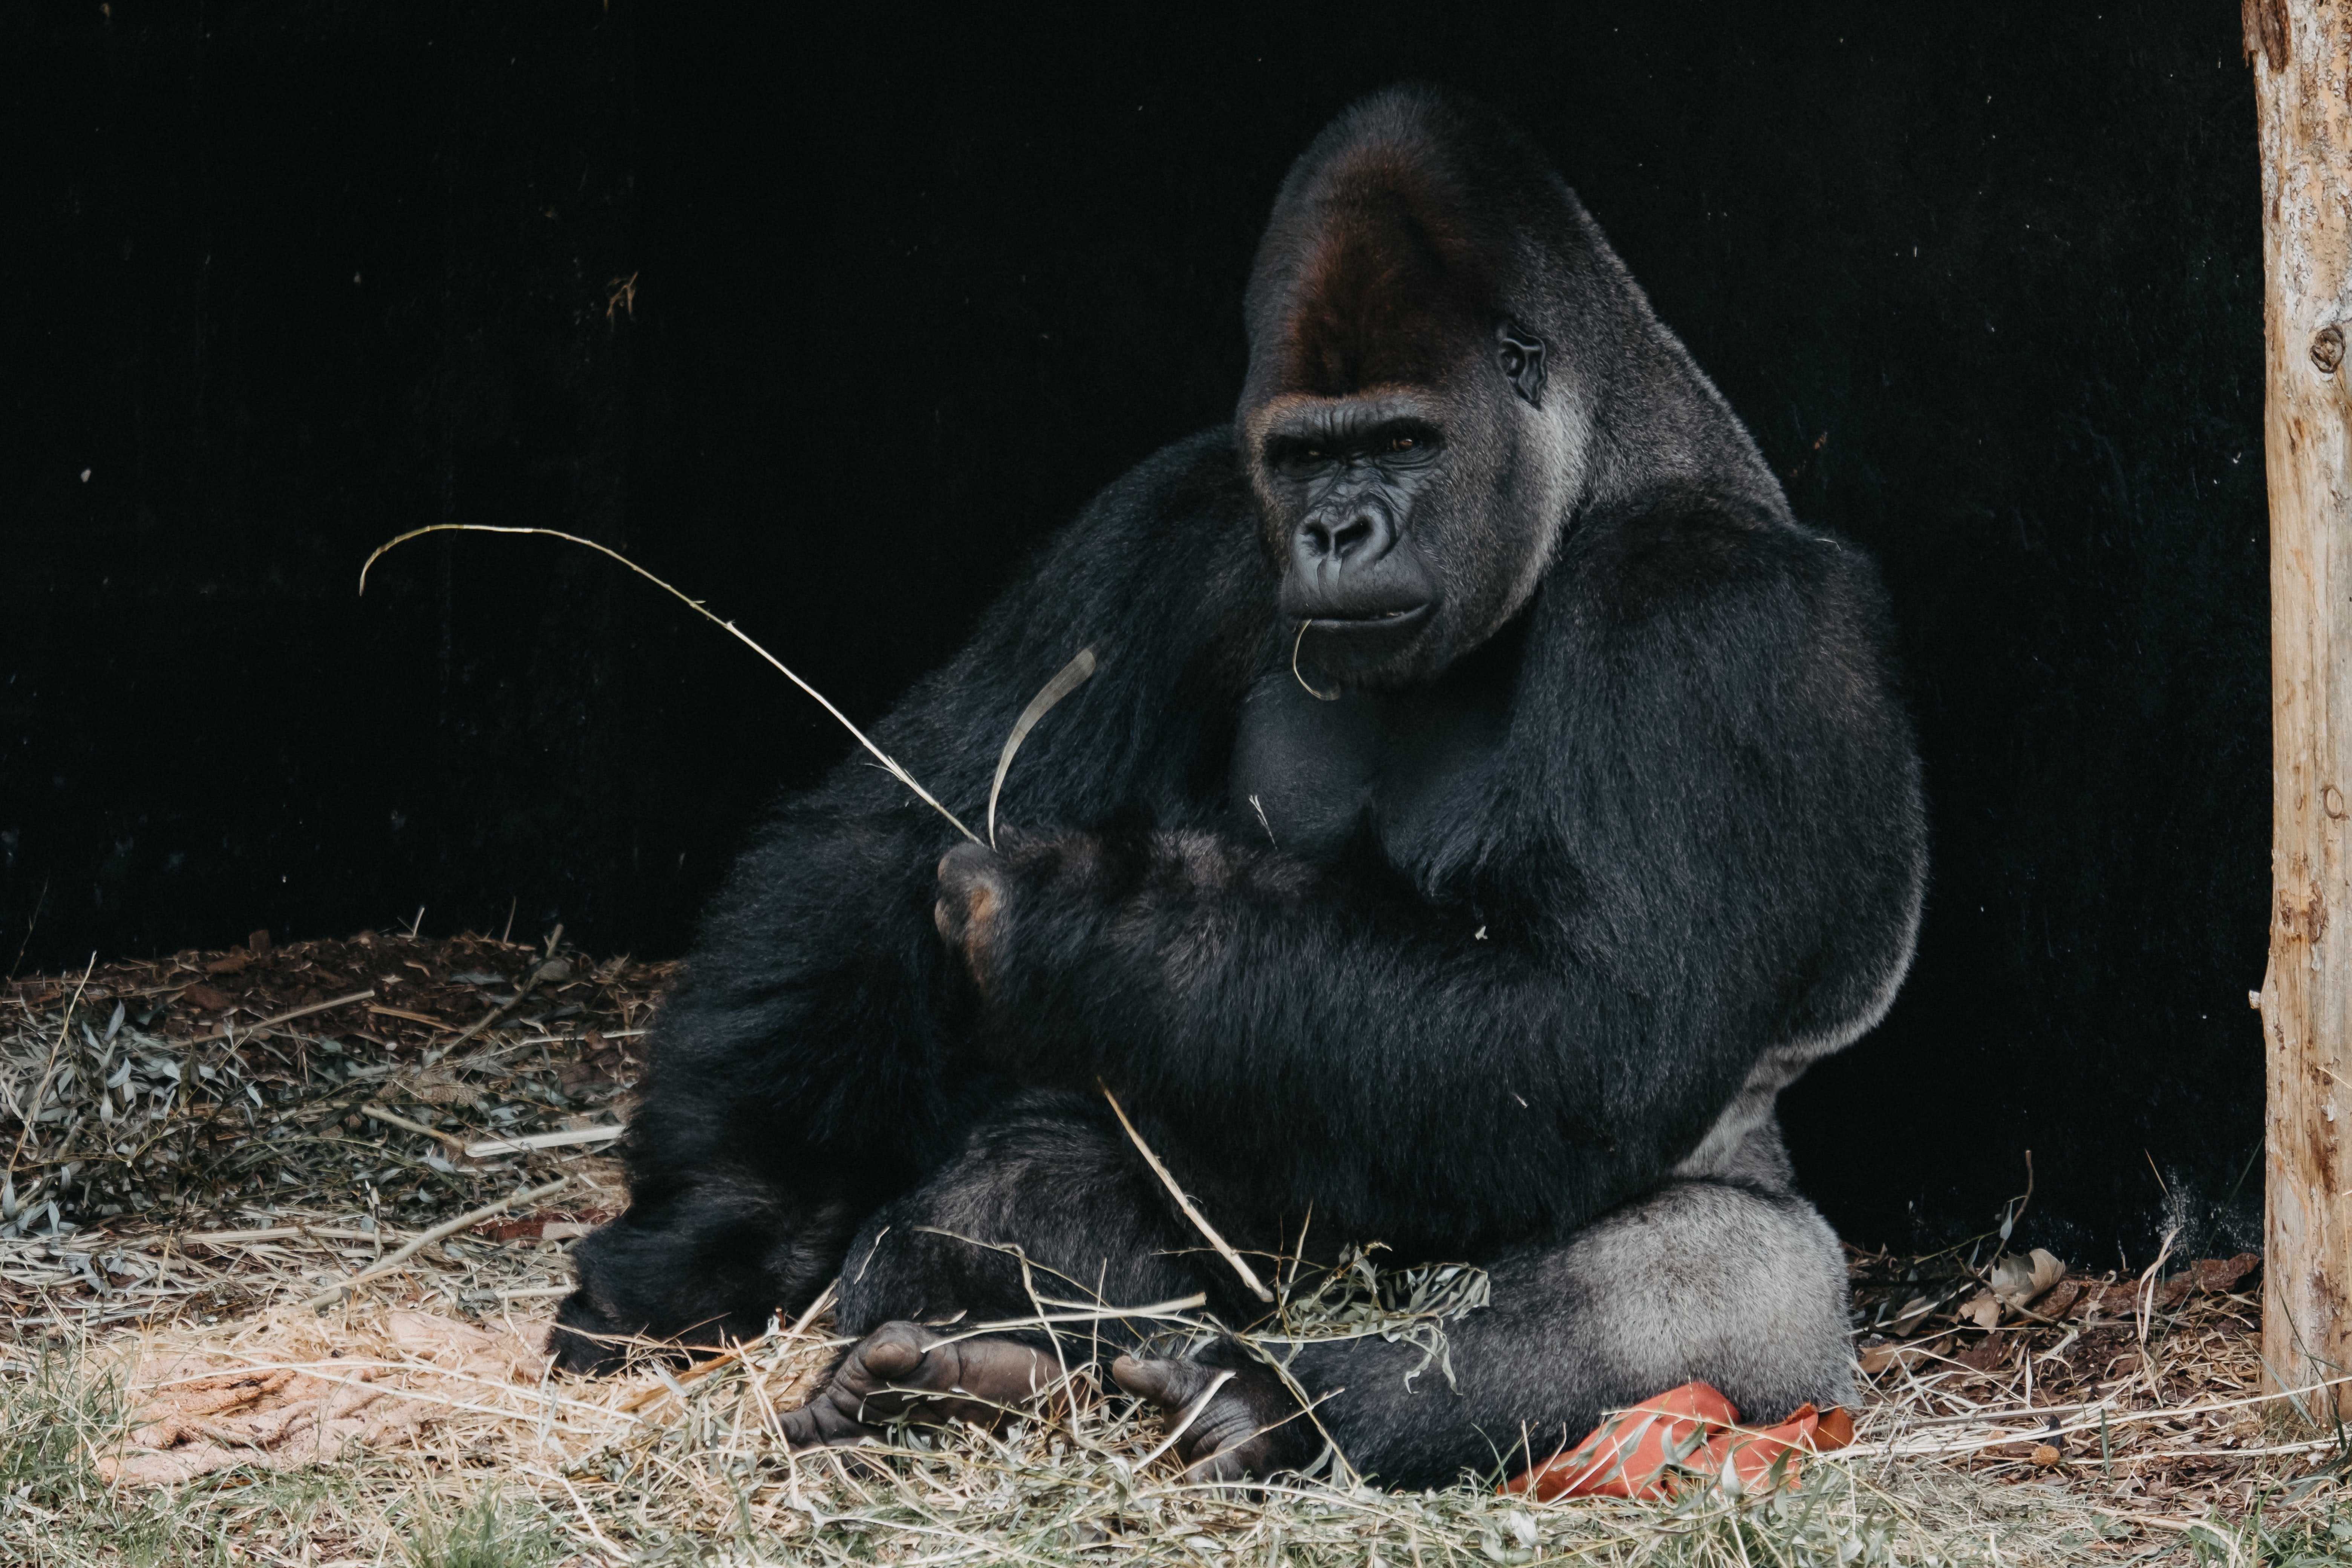 A gorilla chewing on grass. | Photo: Pexels/ Julia Filirovska